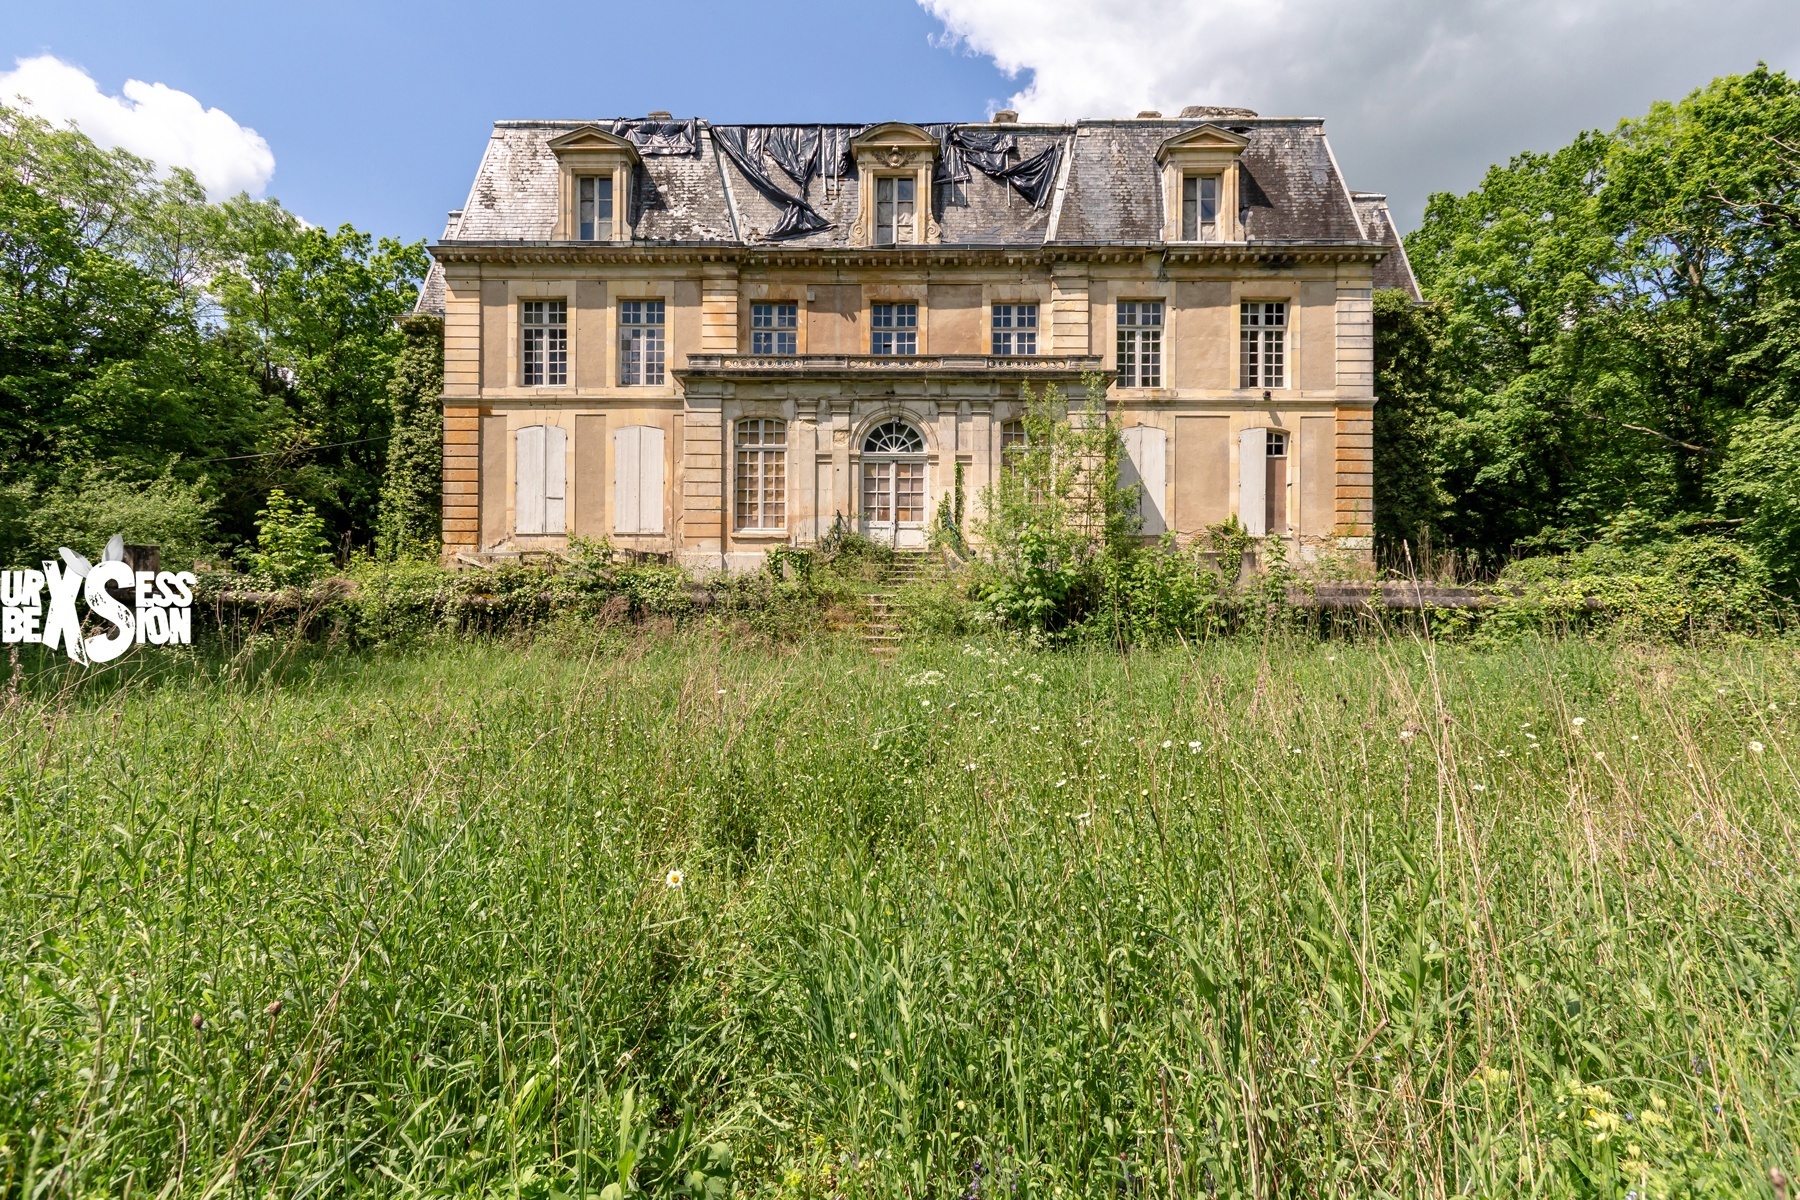 Château abandonné en France | urbexsession.com/chateau-larry-eyler | Urbex France